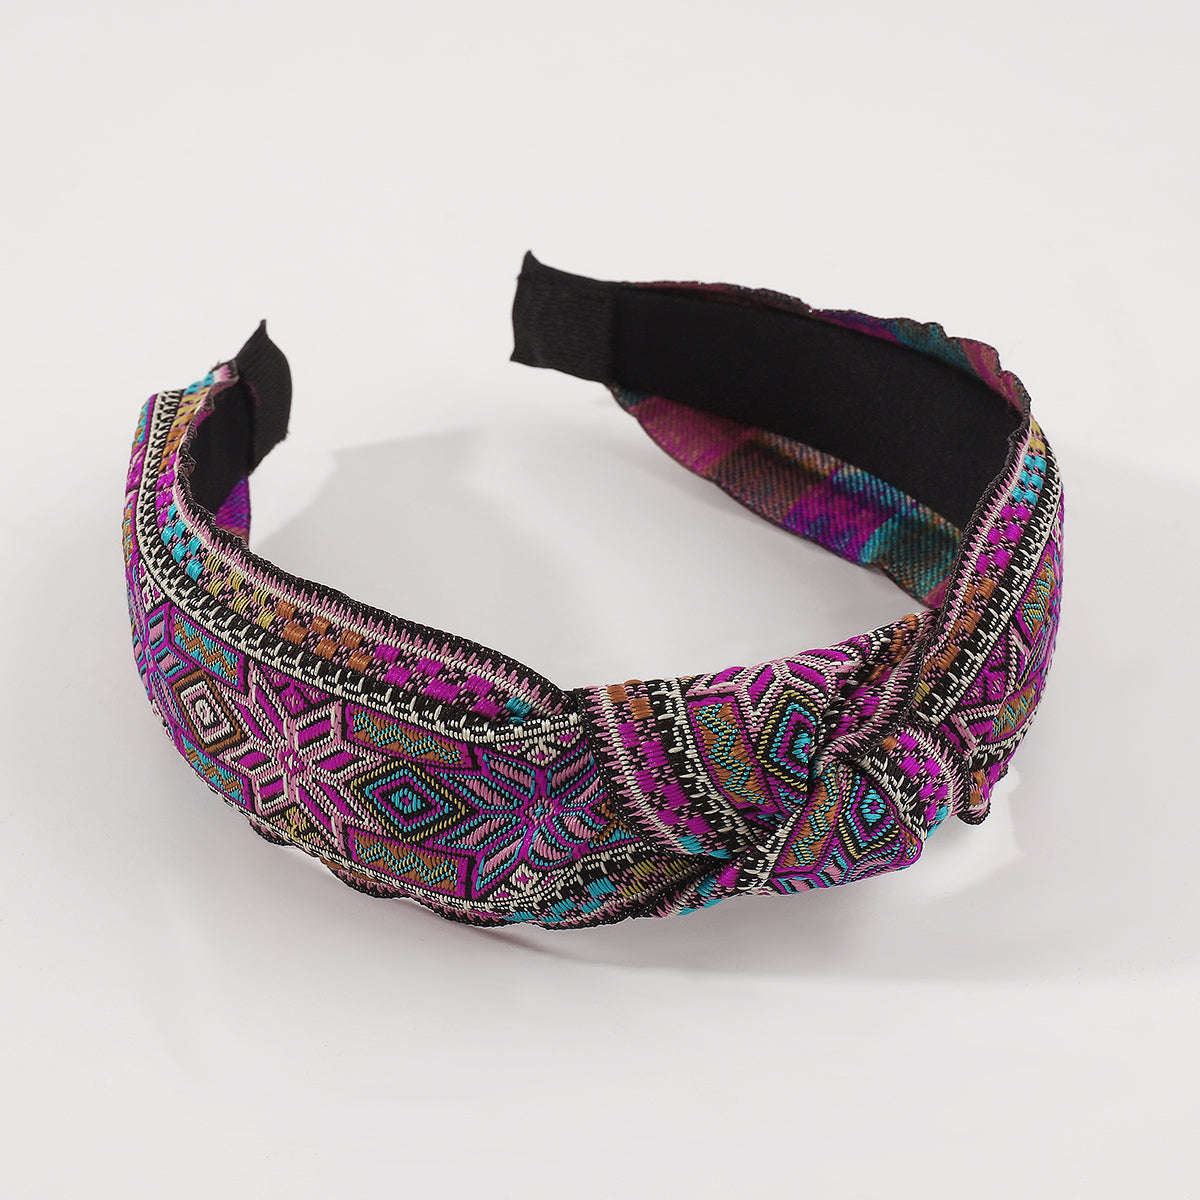 Retro Headband Embroidery Knotted Hairbands medyjewelry